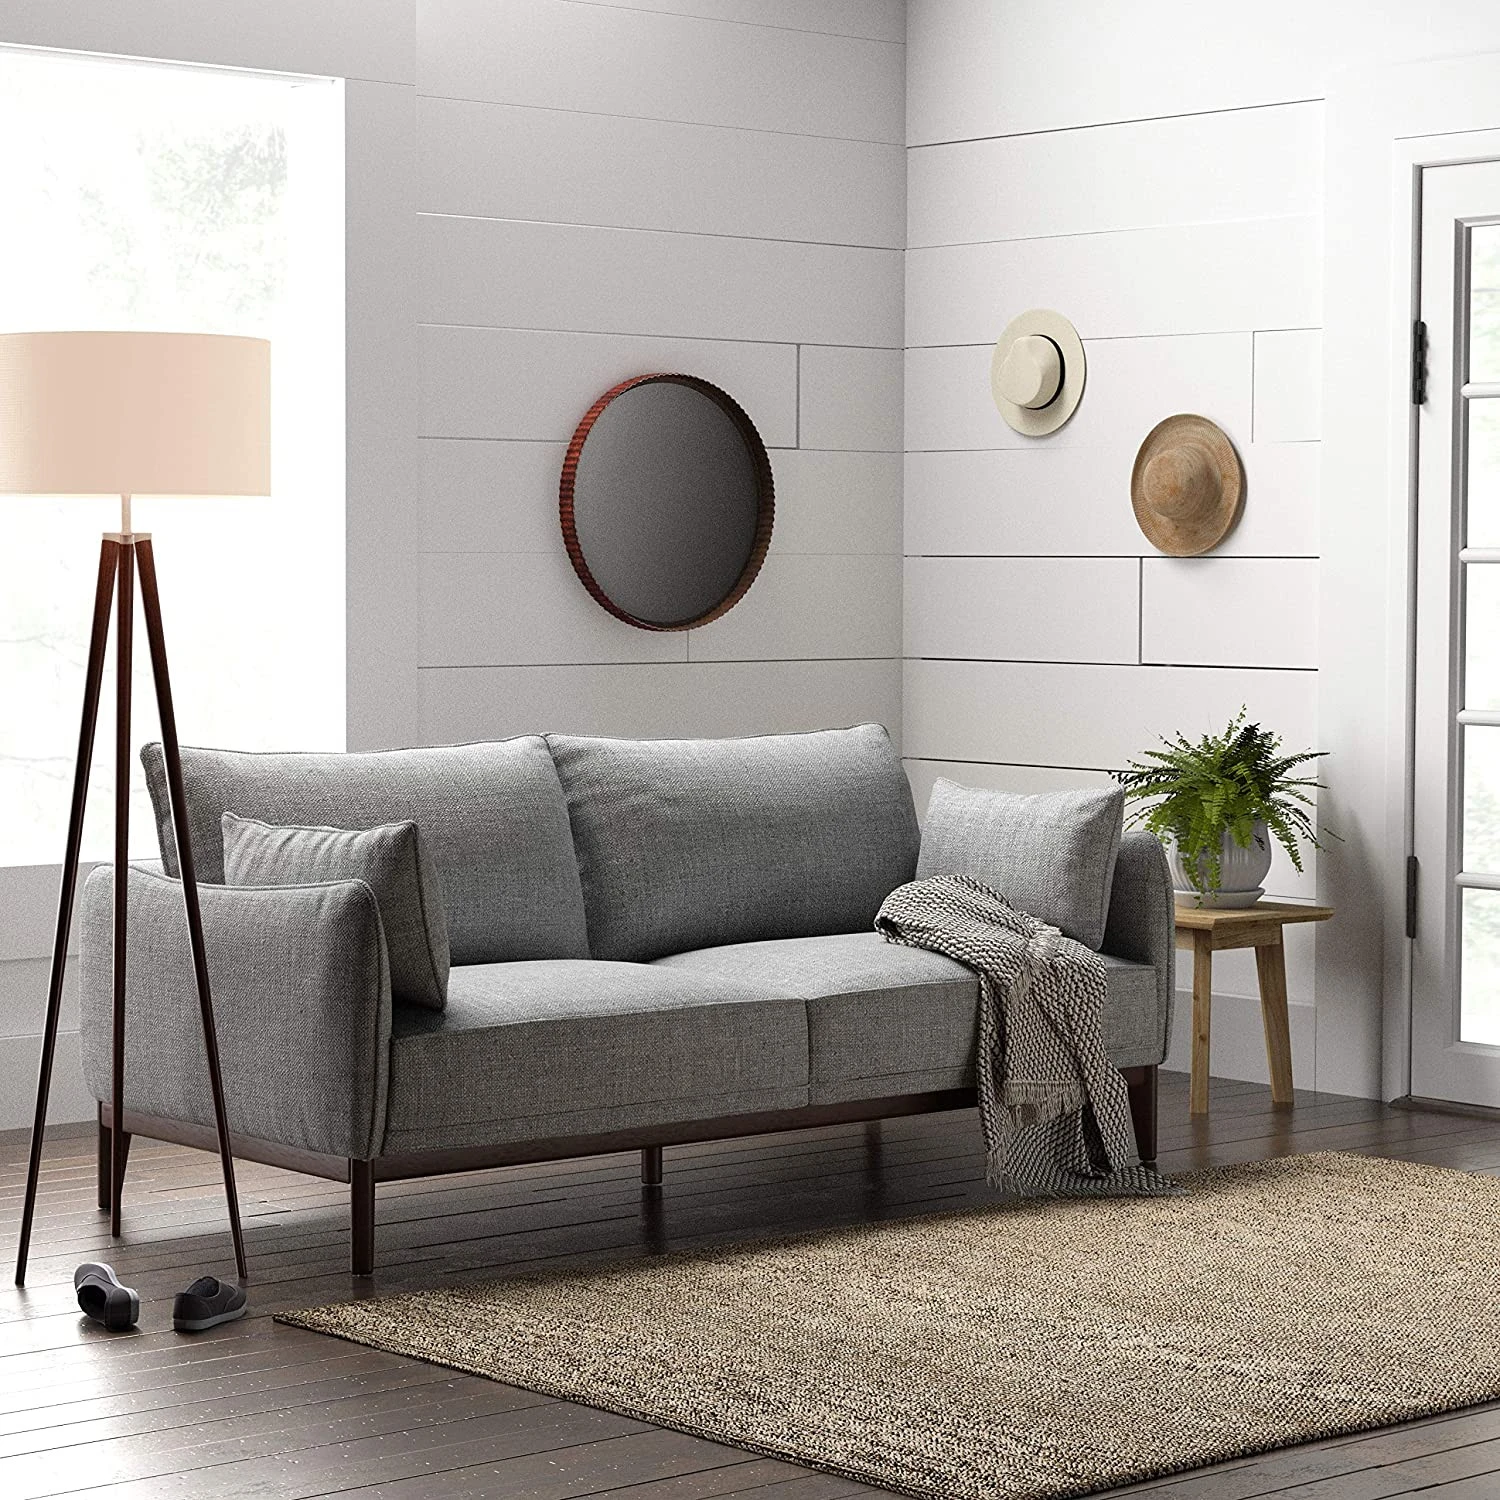 EG-CR005 Foshan Ever Great Modern Fabric Sectional Sofa Set Home Furniture Sofa